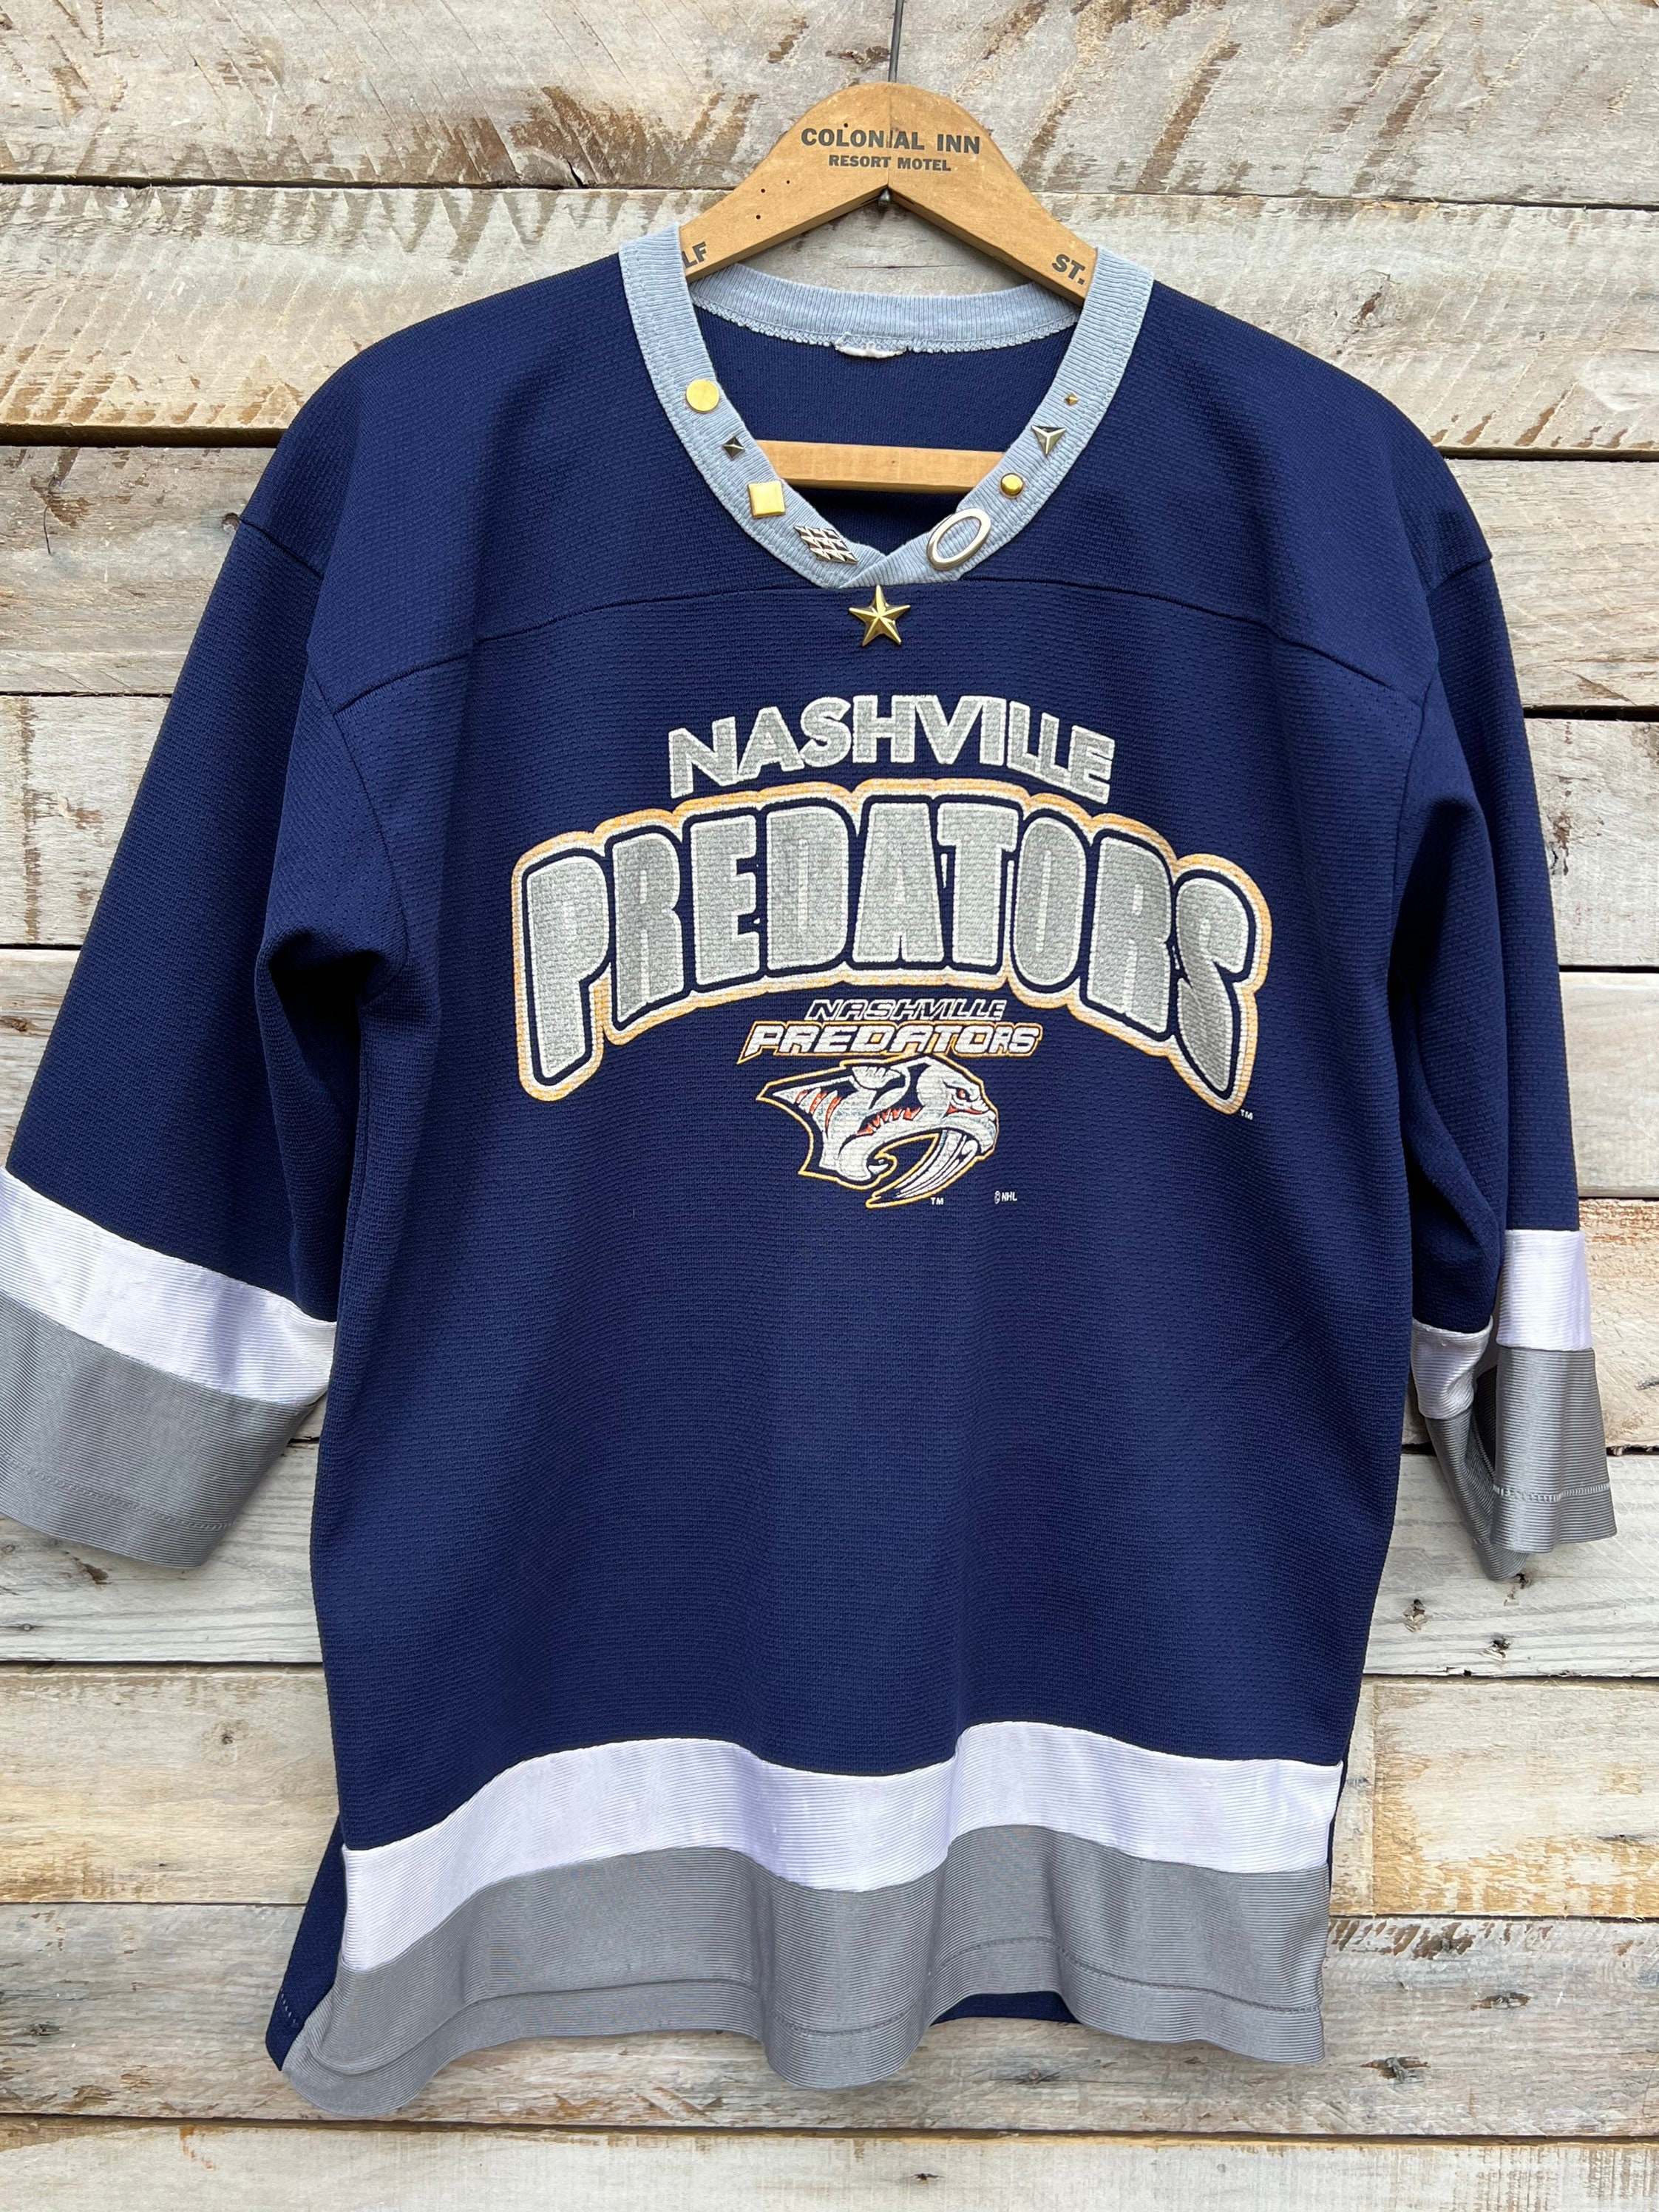 Nashville Predators Winter Classic Jersey Concept : r/Predators